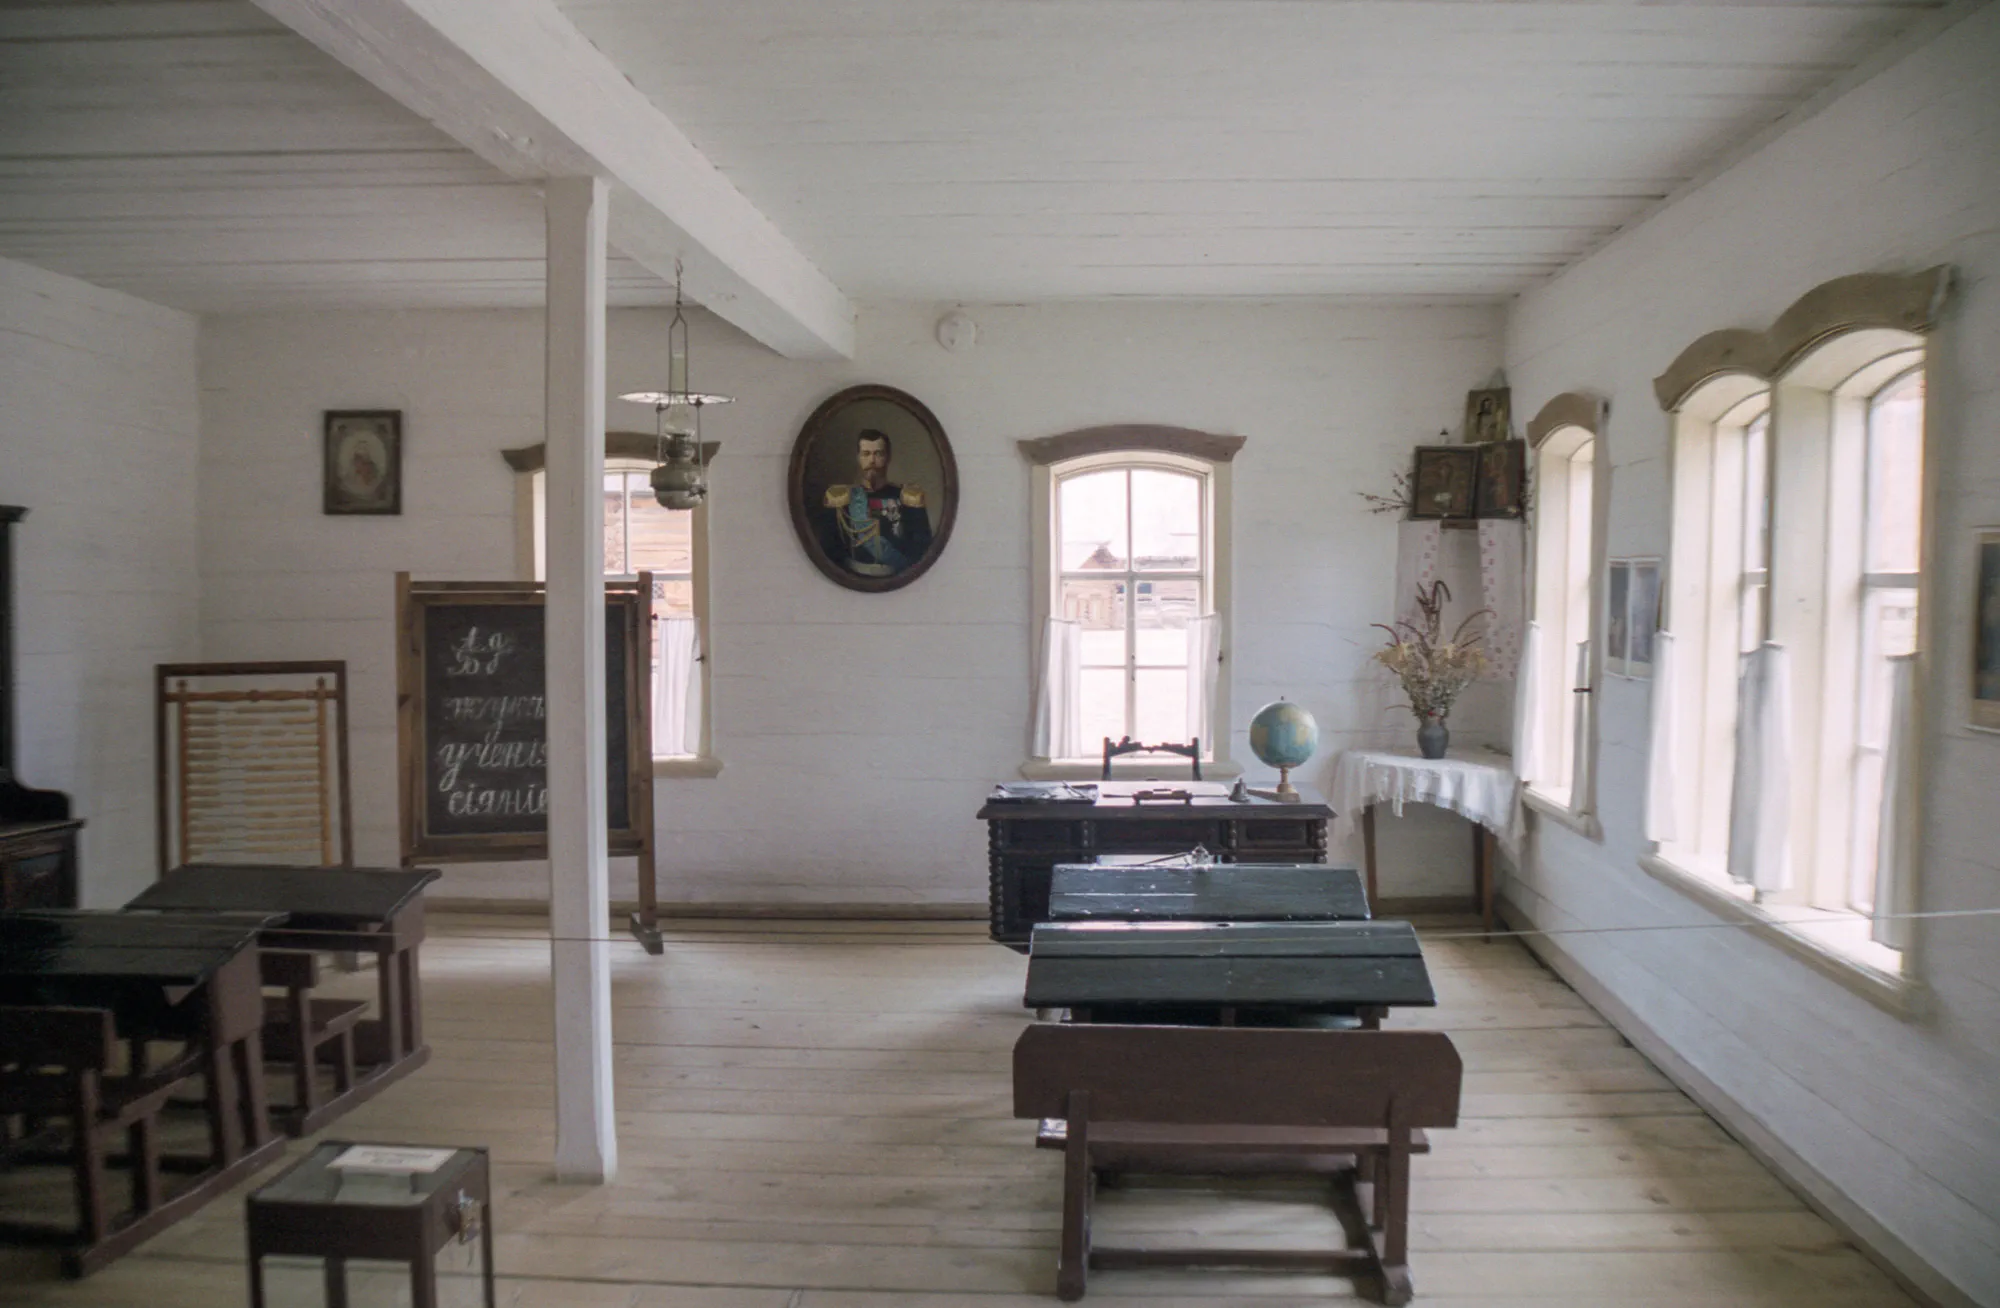 Siberian One Room Schoolhouse